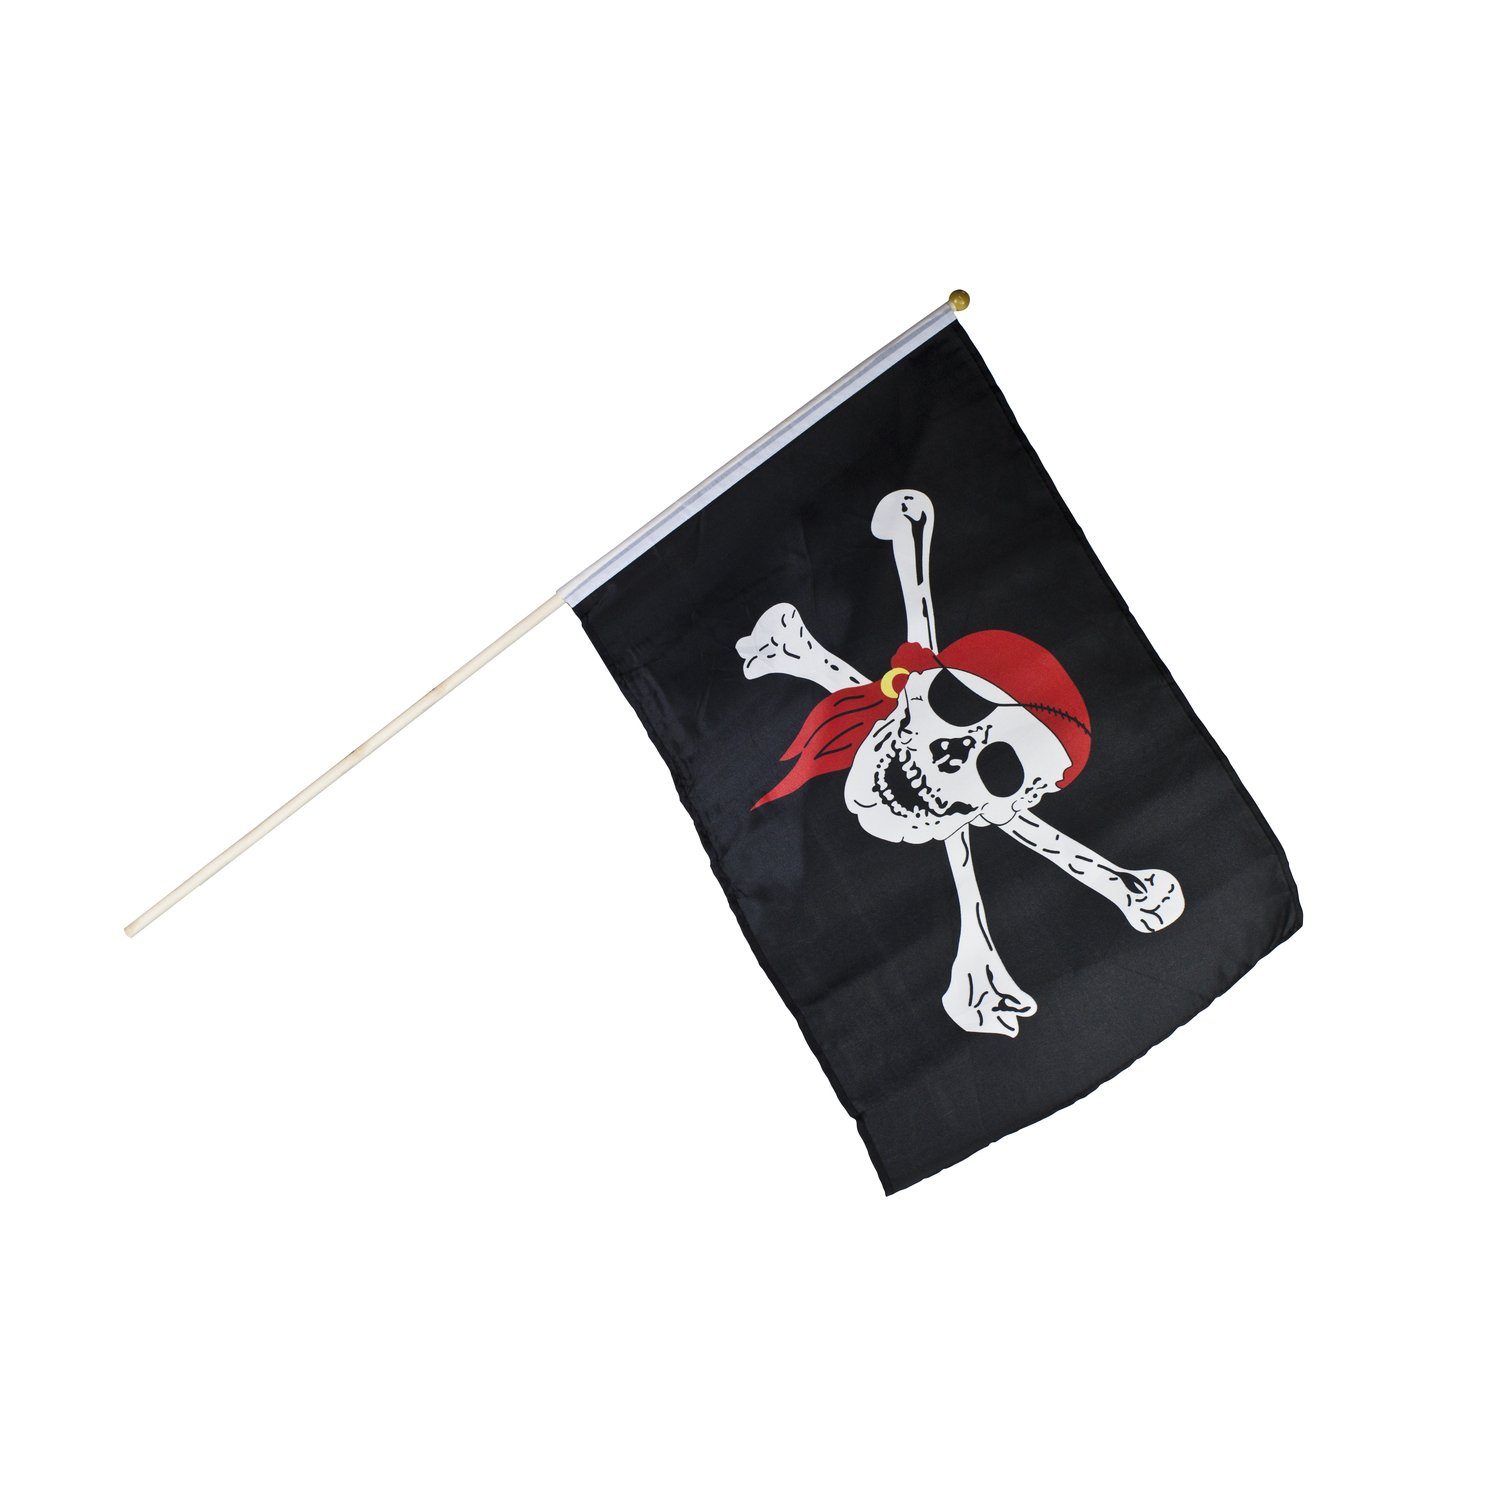 Piraten Fahne 45x30cm langer Stab *)